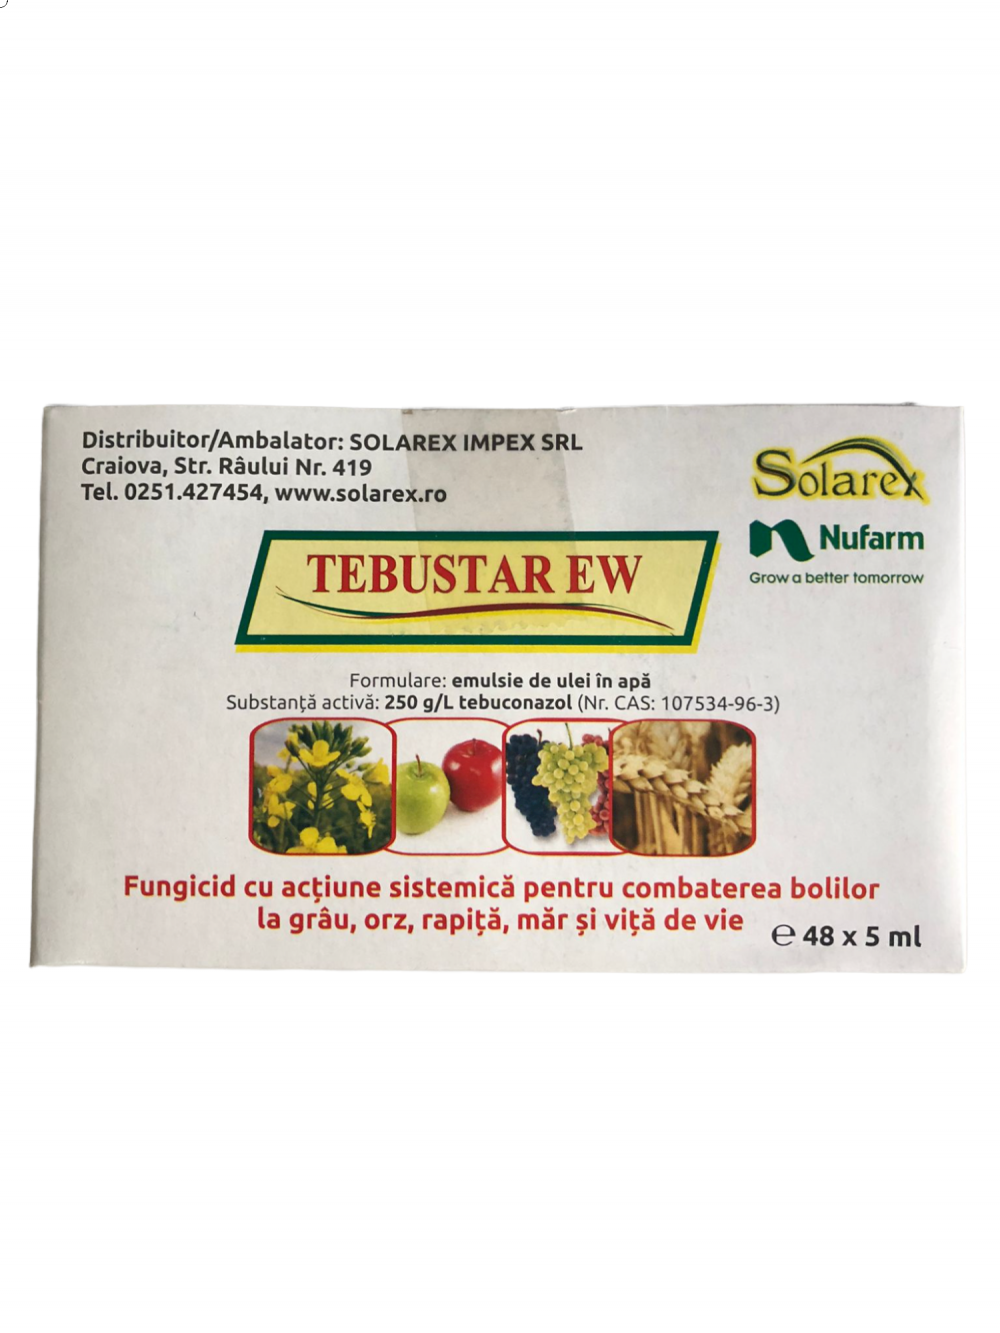 Fungicid sistemic Tebustar EW 48 x 5 ml